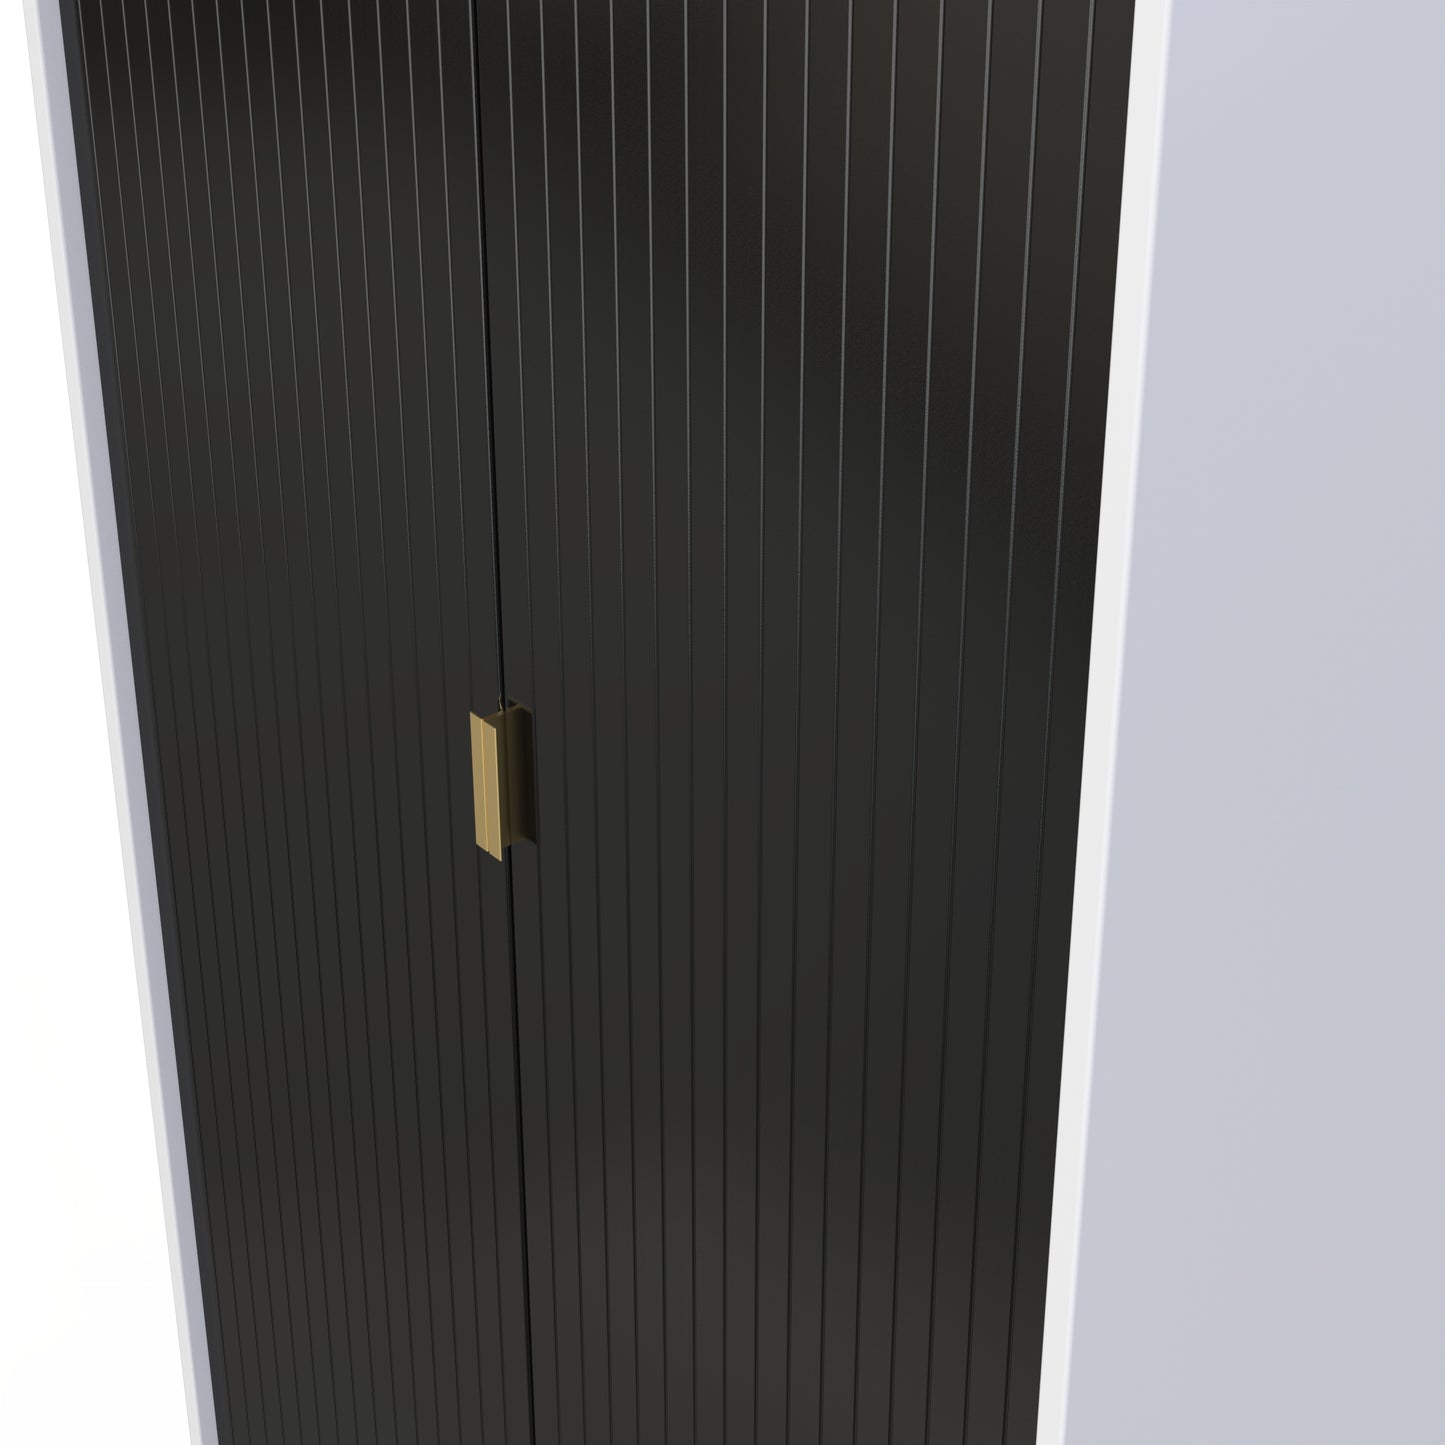 Linear Tall Plain 2 door Wardrobe Mixed colour